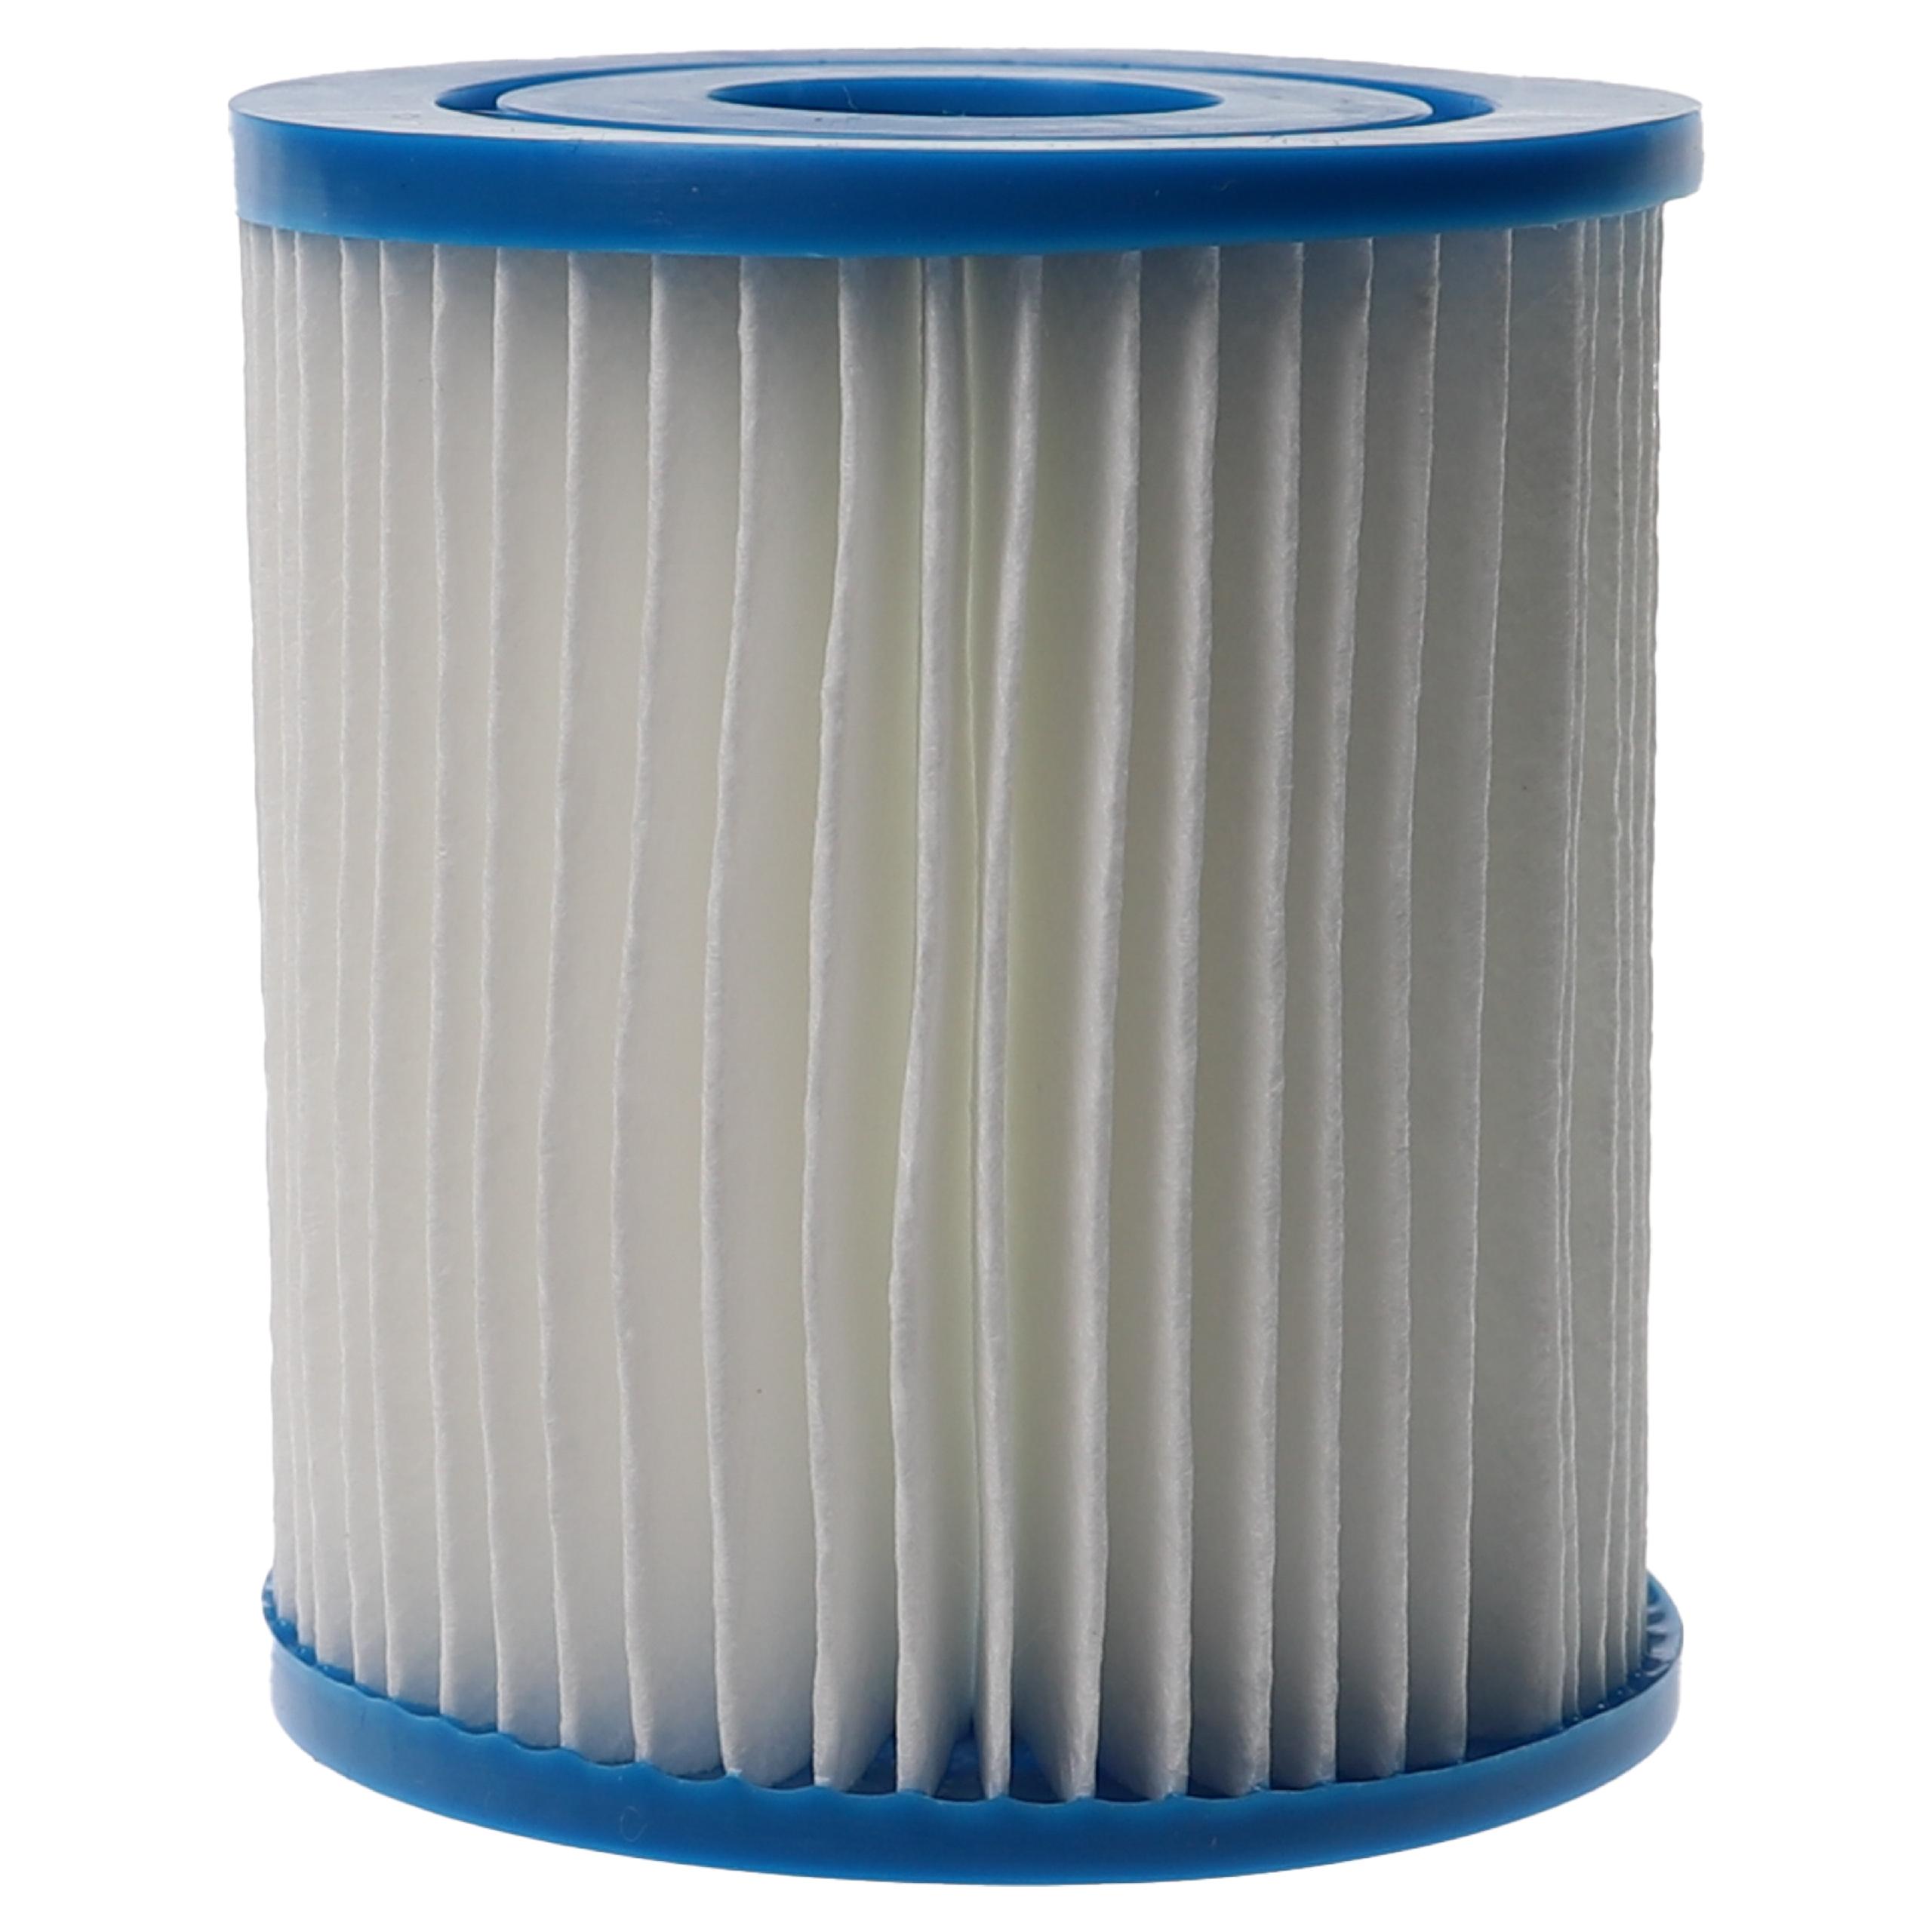  5x Filter Cartridge replaces APC C7490 for Intex Swimming Pool, Filter Pump - Blue White